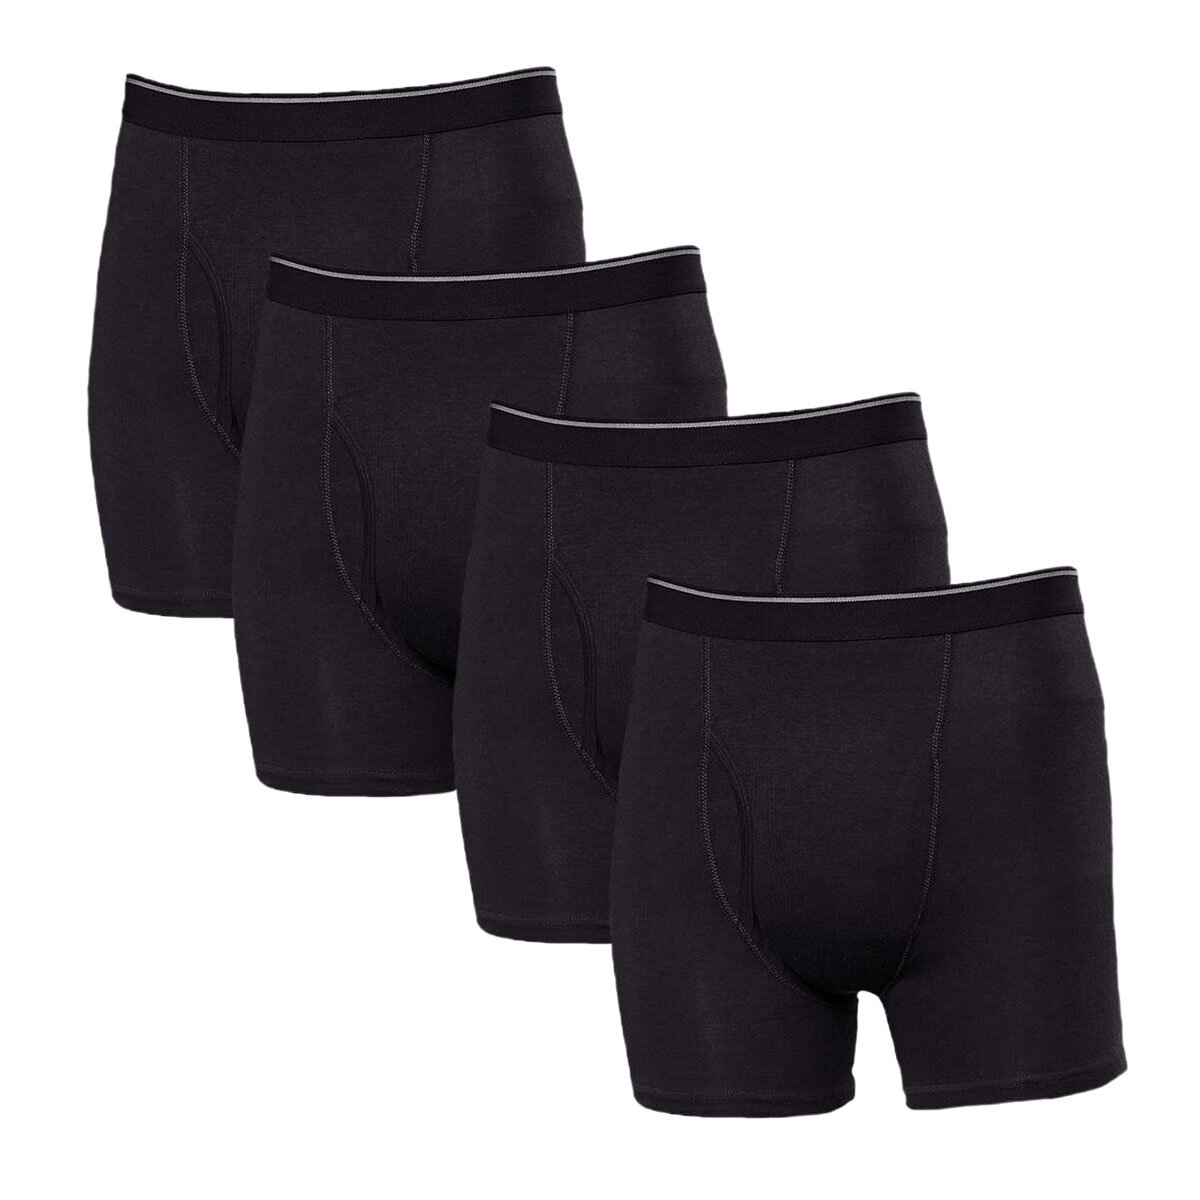 Kirkland Signature Men's 4 Pack Boxer Shorts, Medium